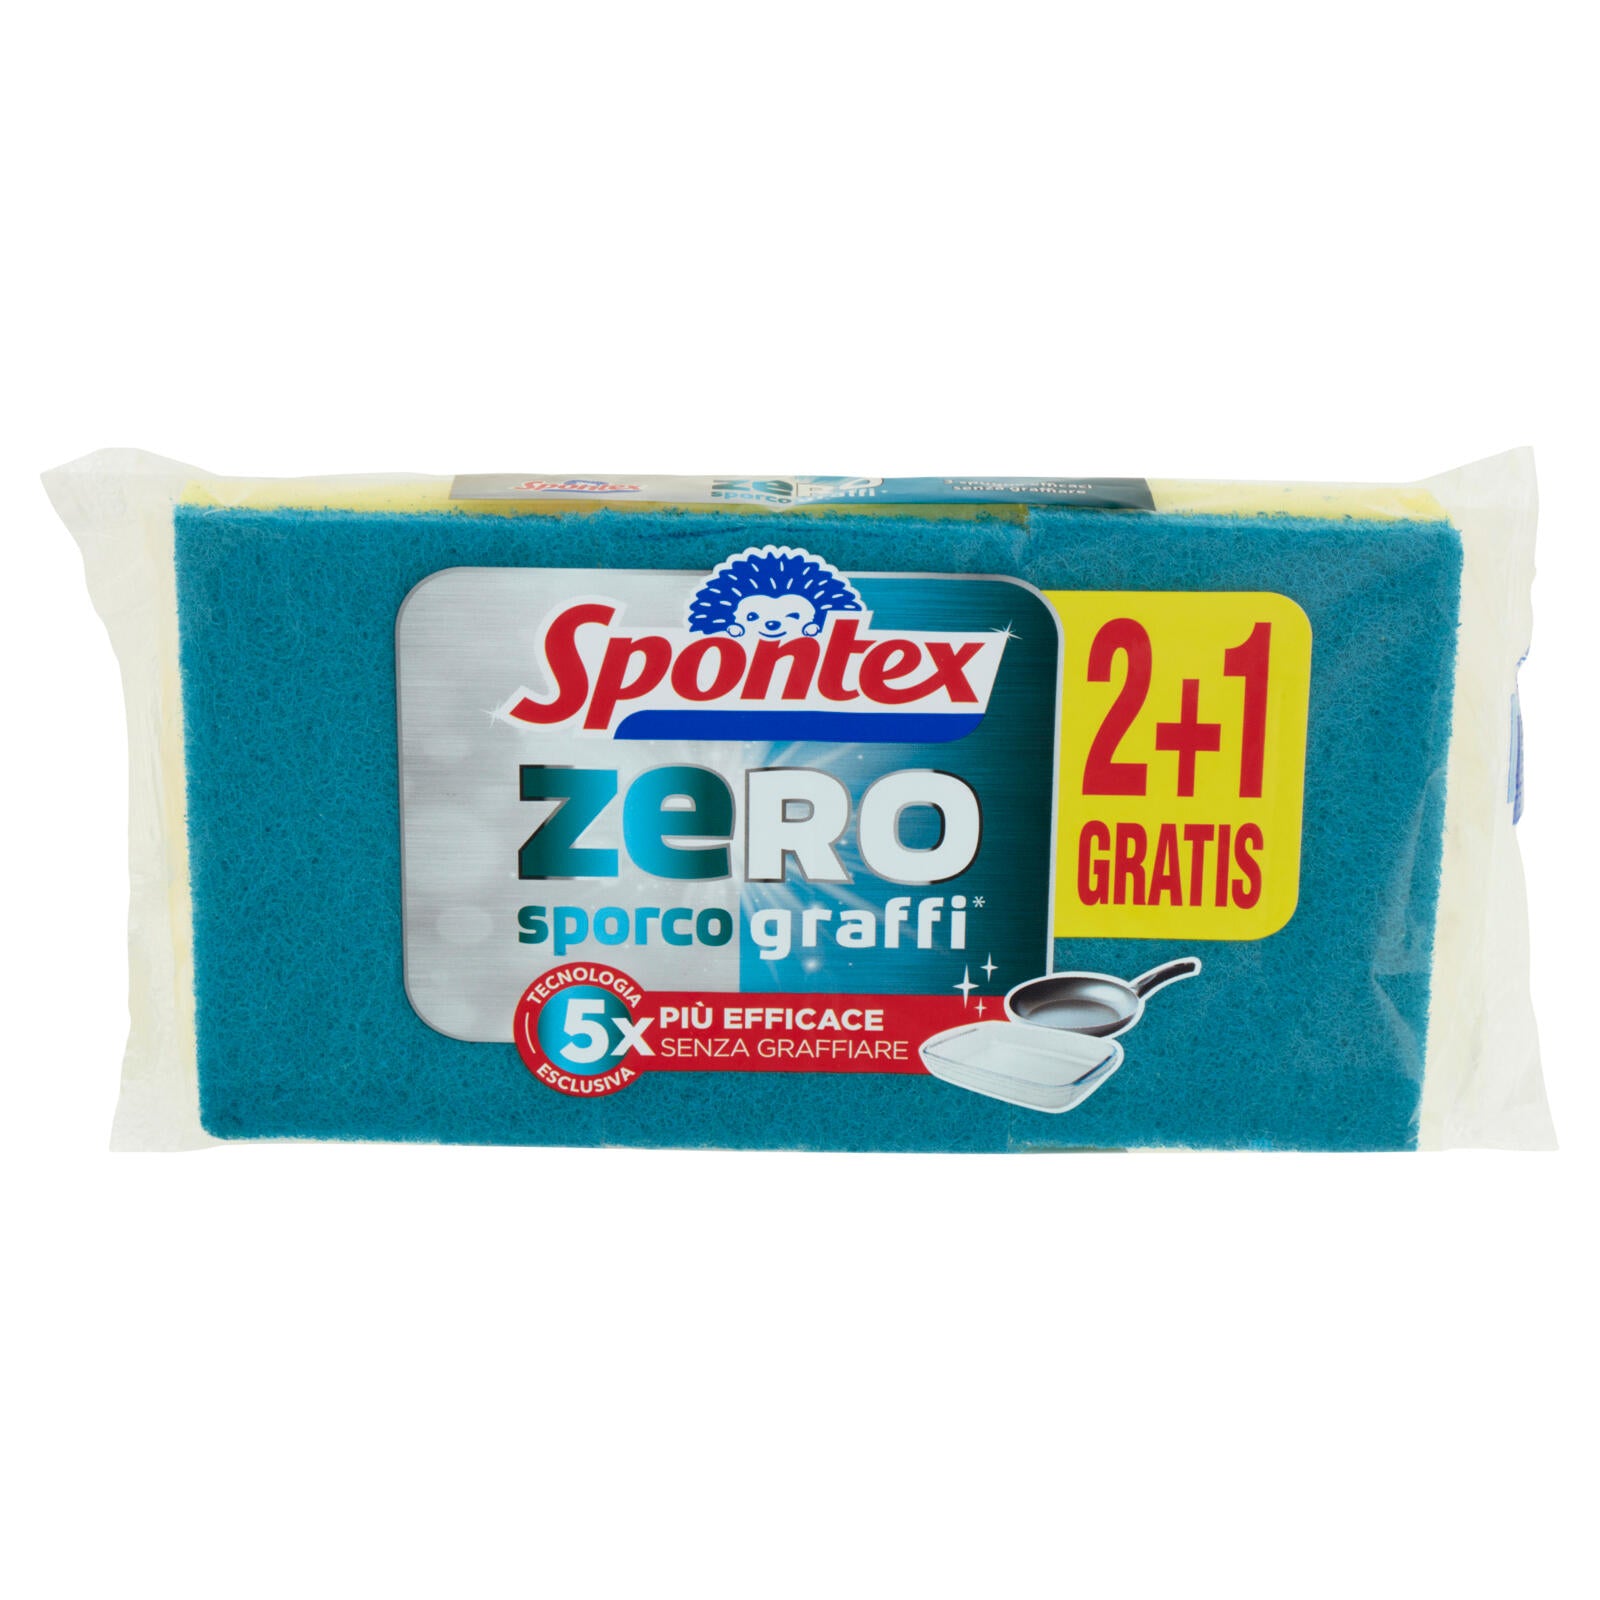 Spontex Zero 2+1